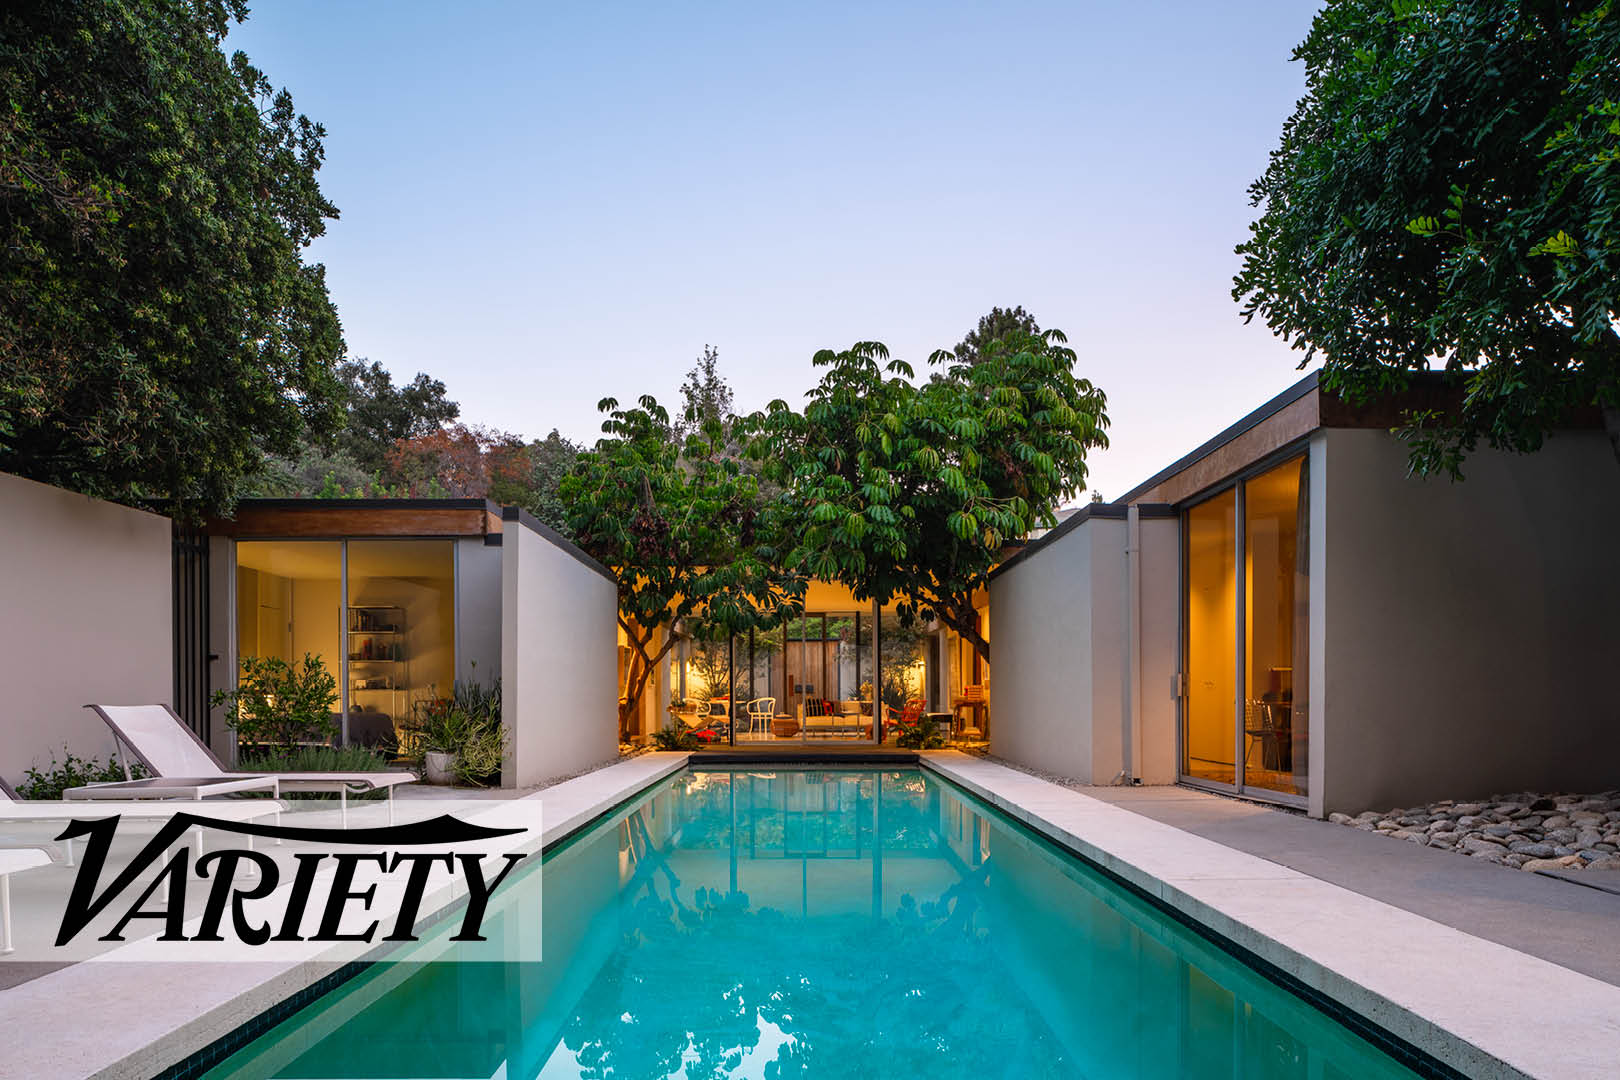 Variety: Pasadena’s John Kelsey House Gets New Hollywood Steward